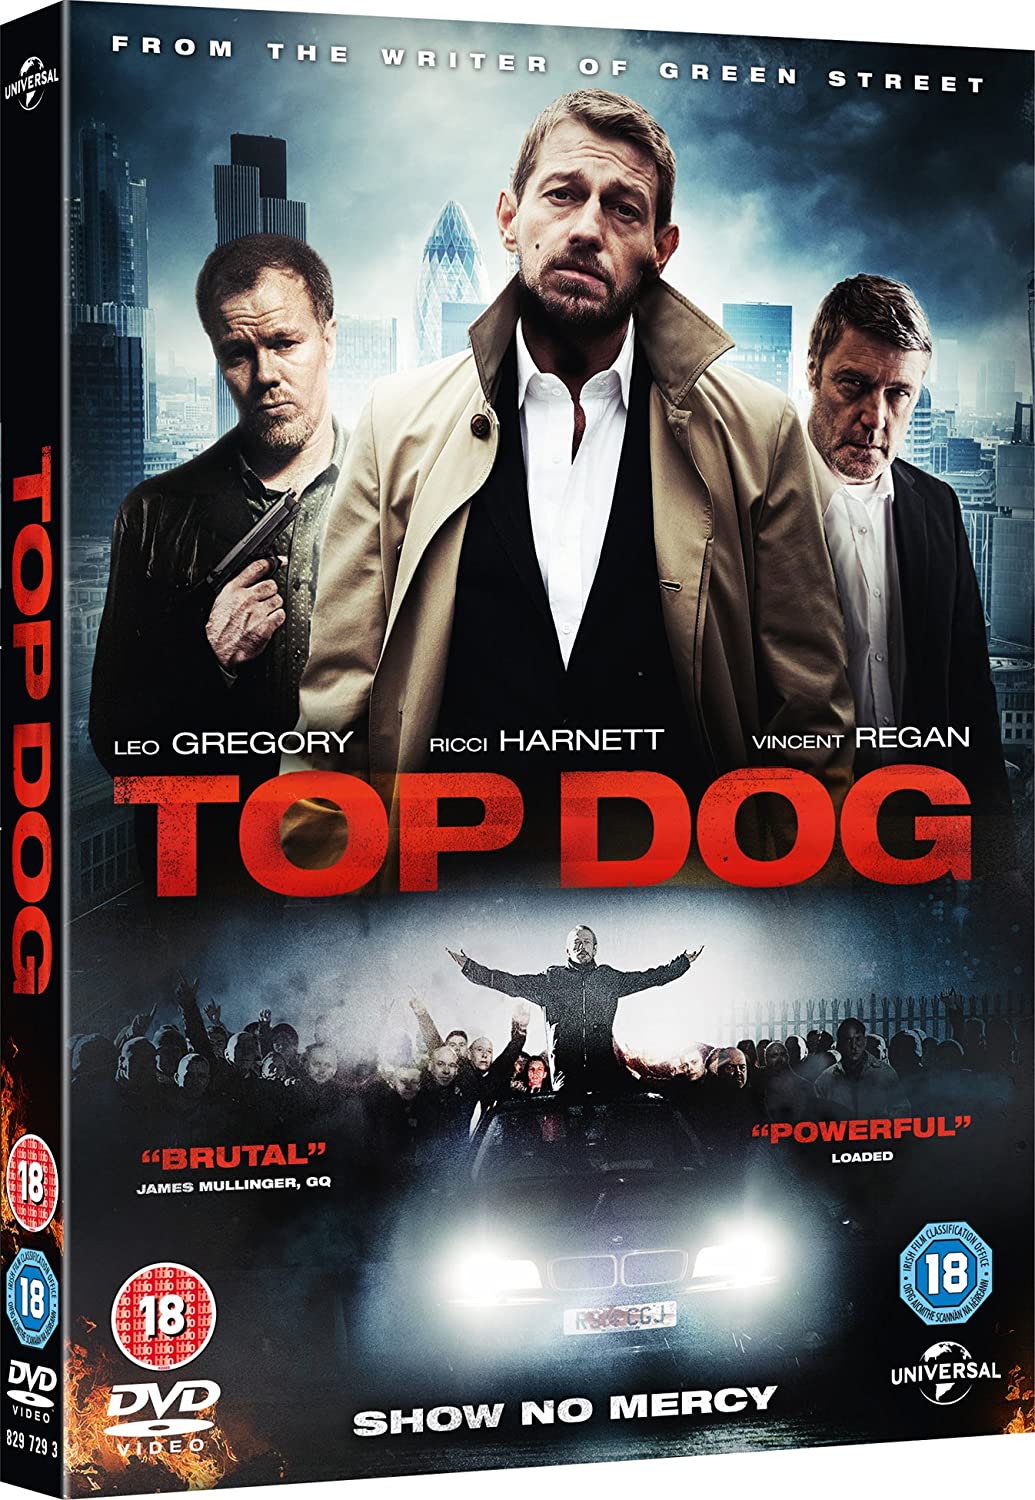 Top Dog (DVD)